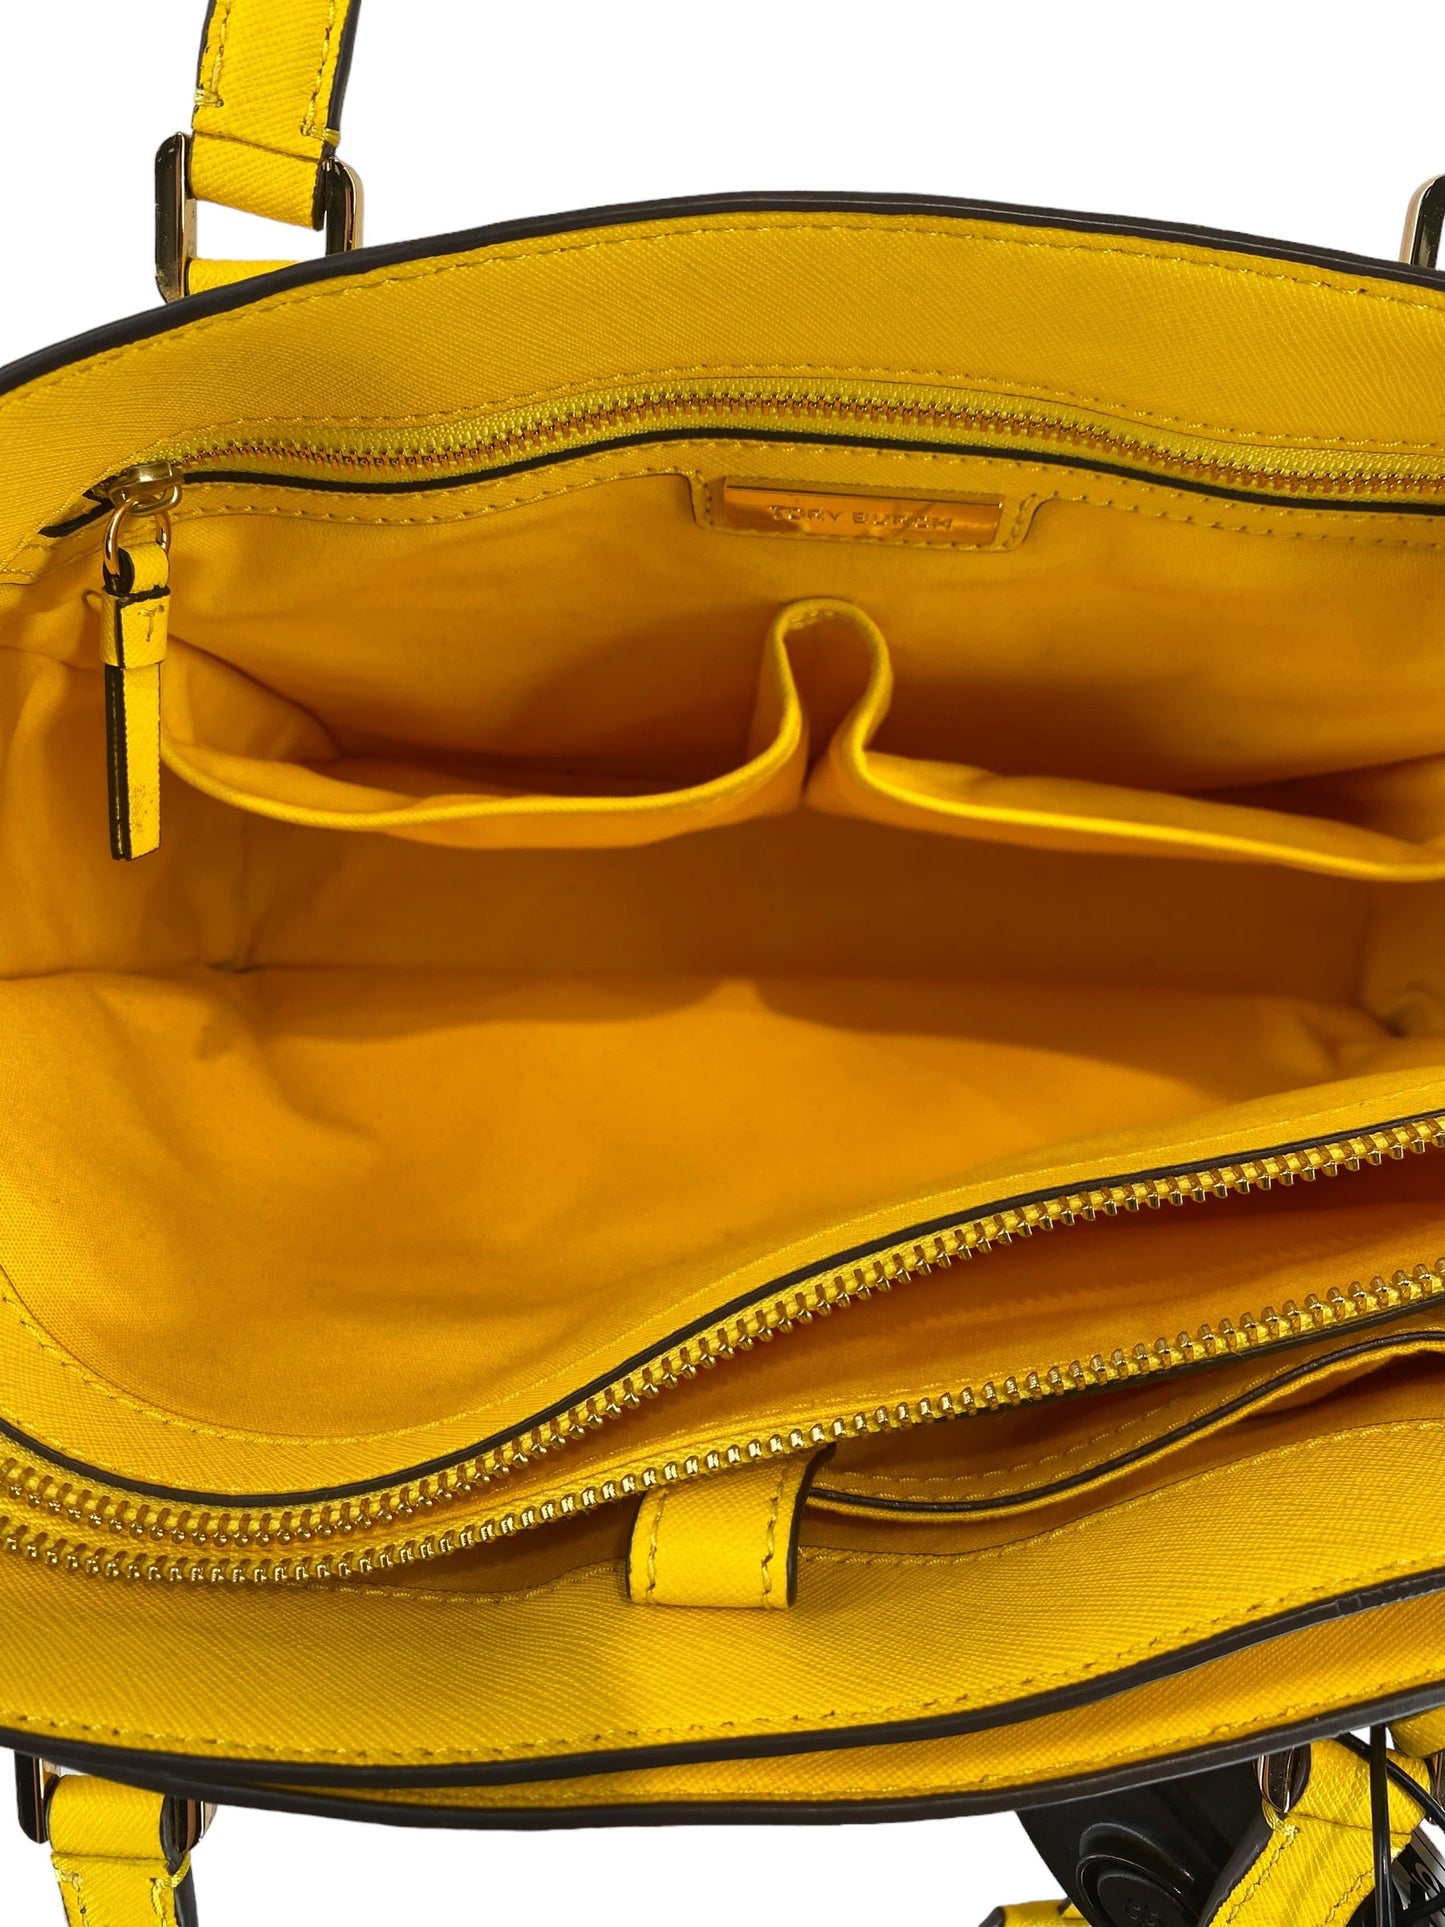 Handbag Tory Burch, Size Medium